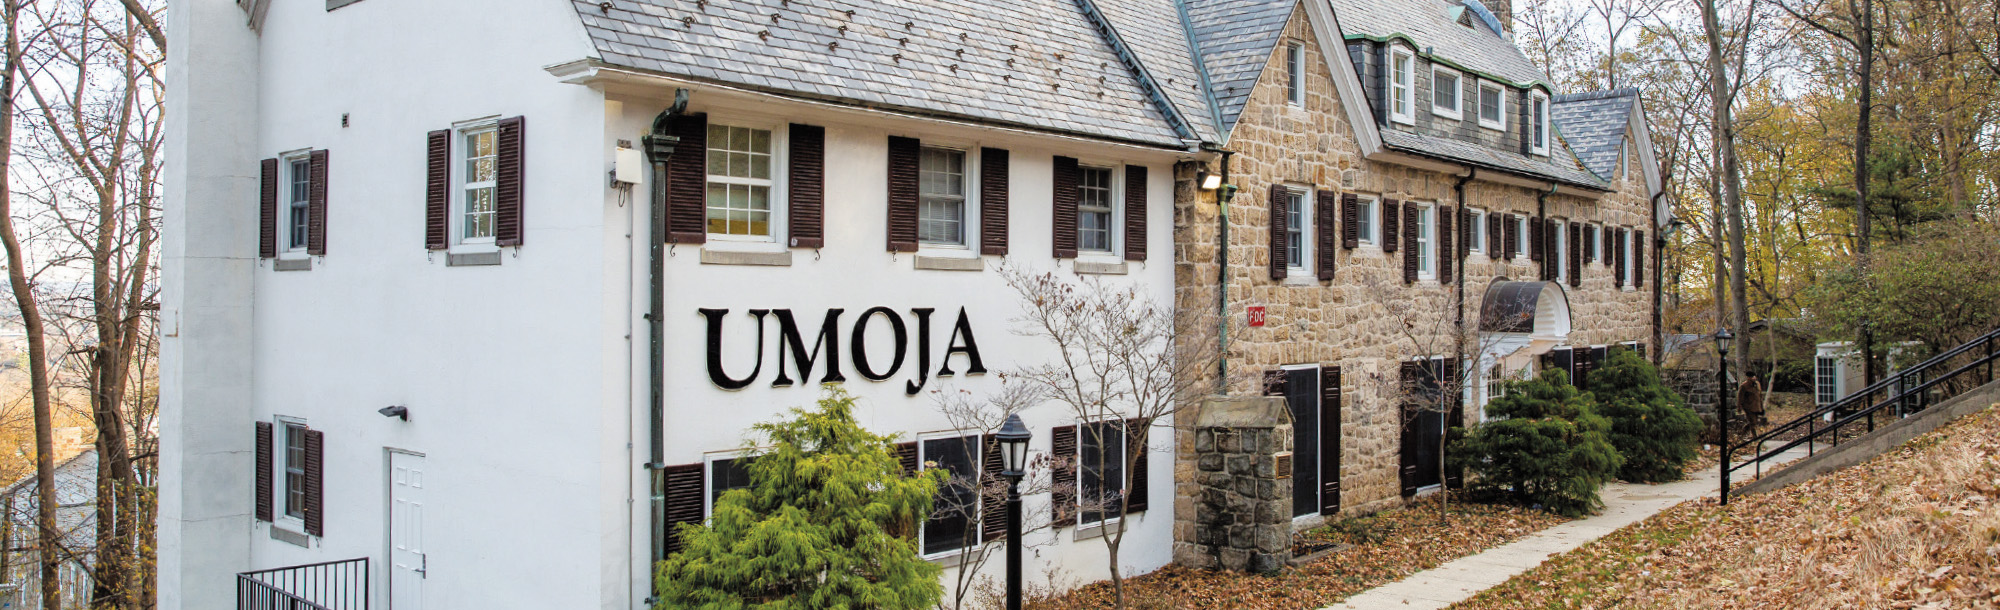 The UMOJA House